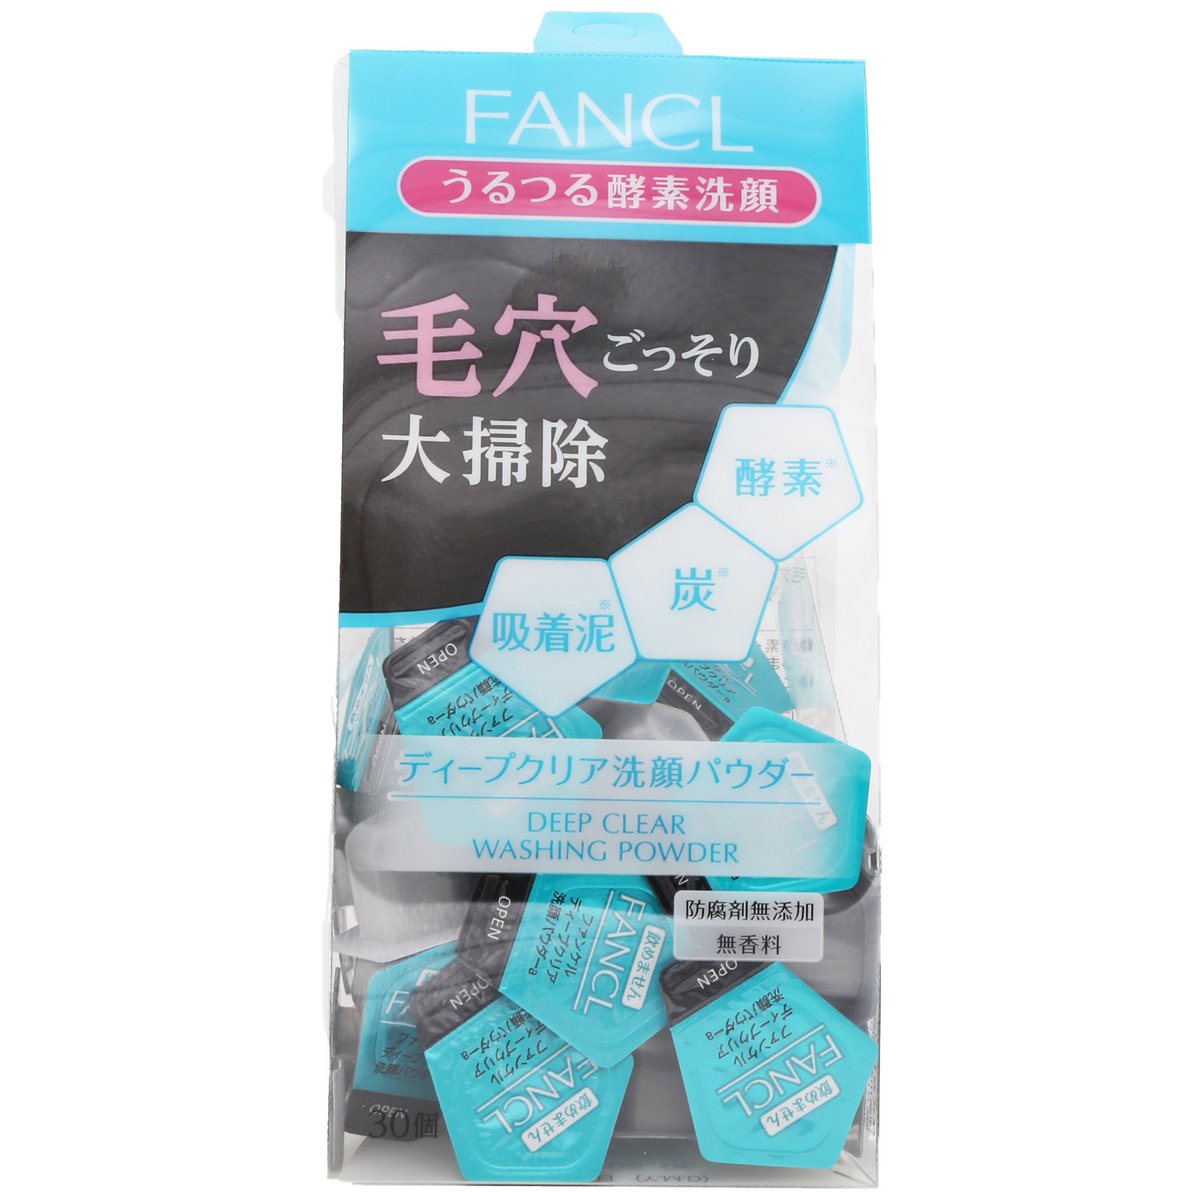 Fancl Deep Clear Washing Powder